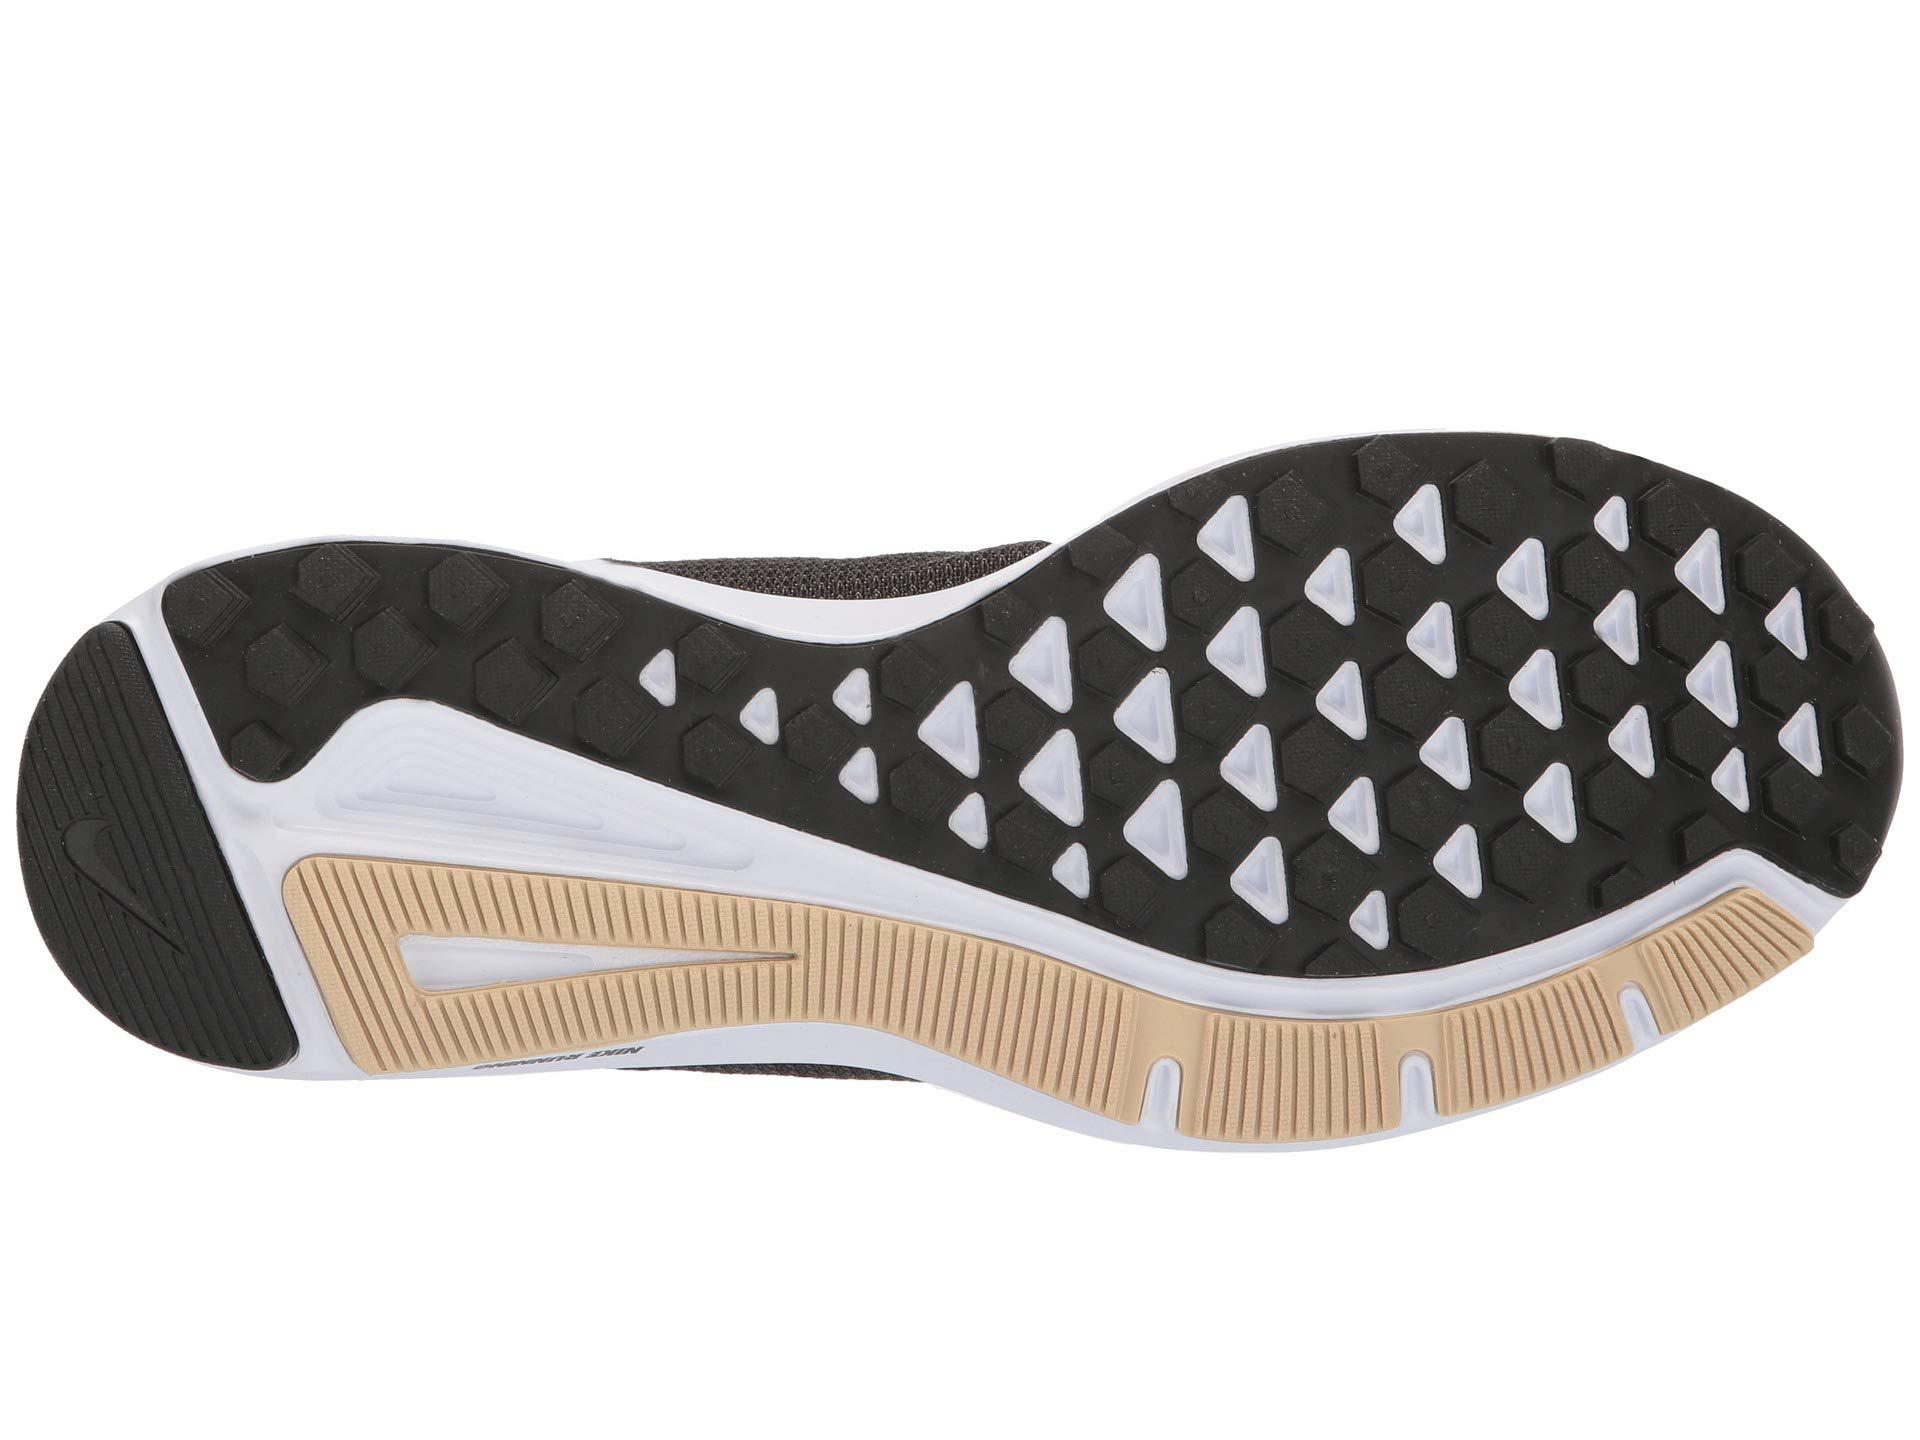 Nike Rubber Quest Camo (sequoia/desert Ore/medium Olive) Men's Running Shoes  for Men - Lyst